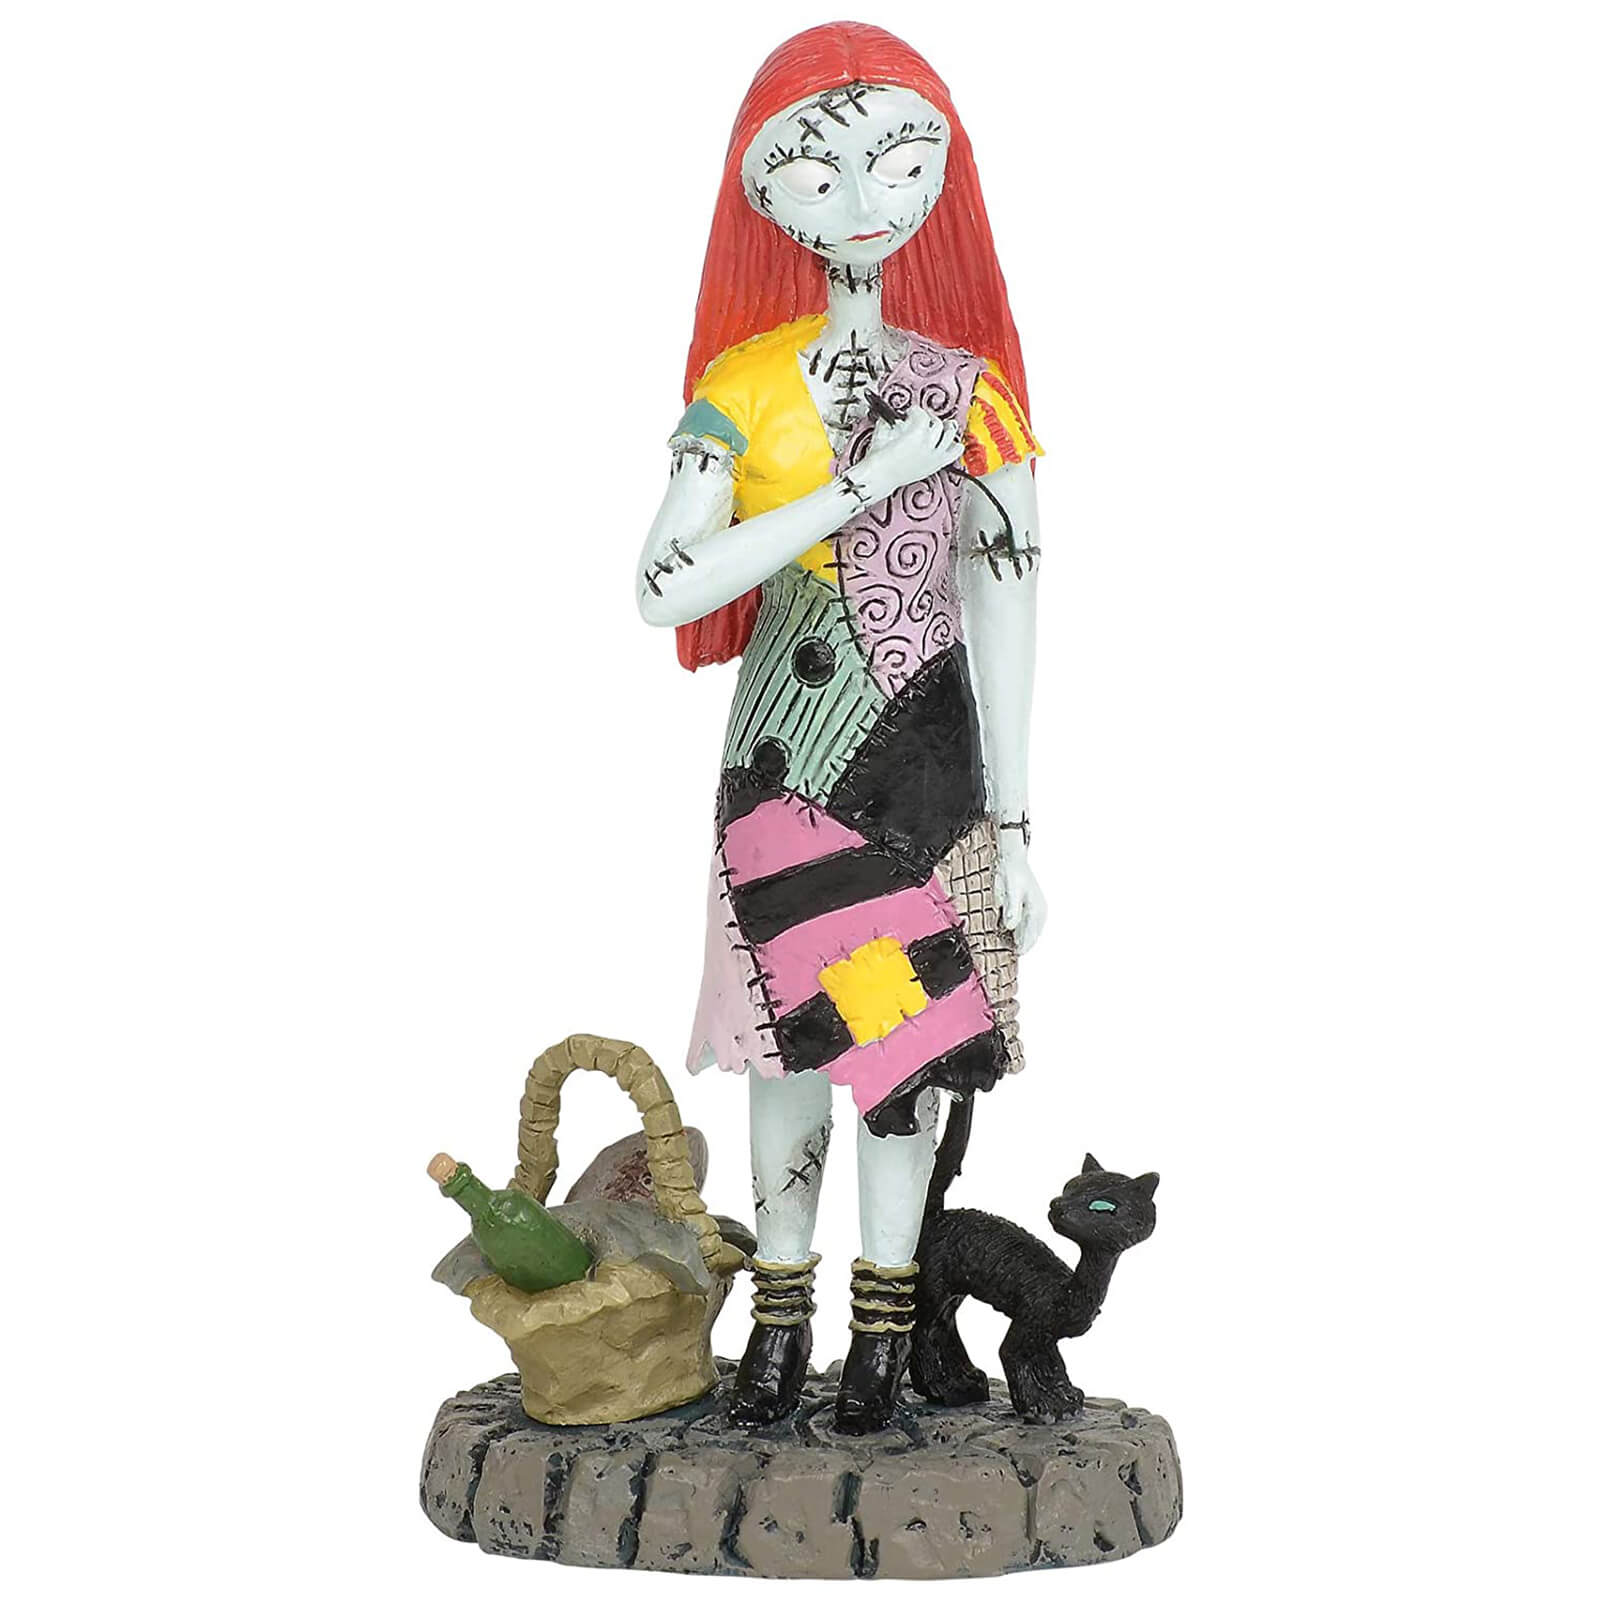 Enesco The Nightmare Before Christmas Village Sally's Date Night Figurine 9cm